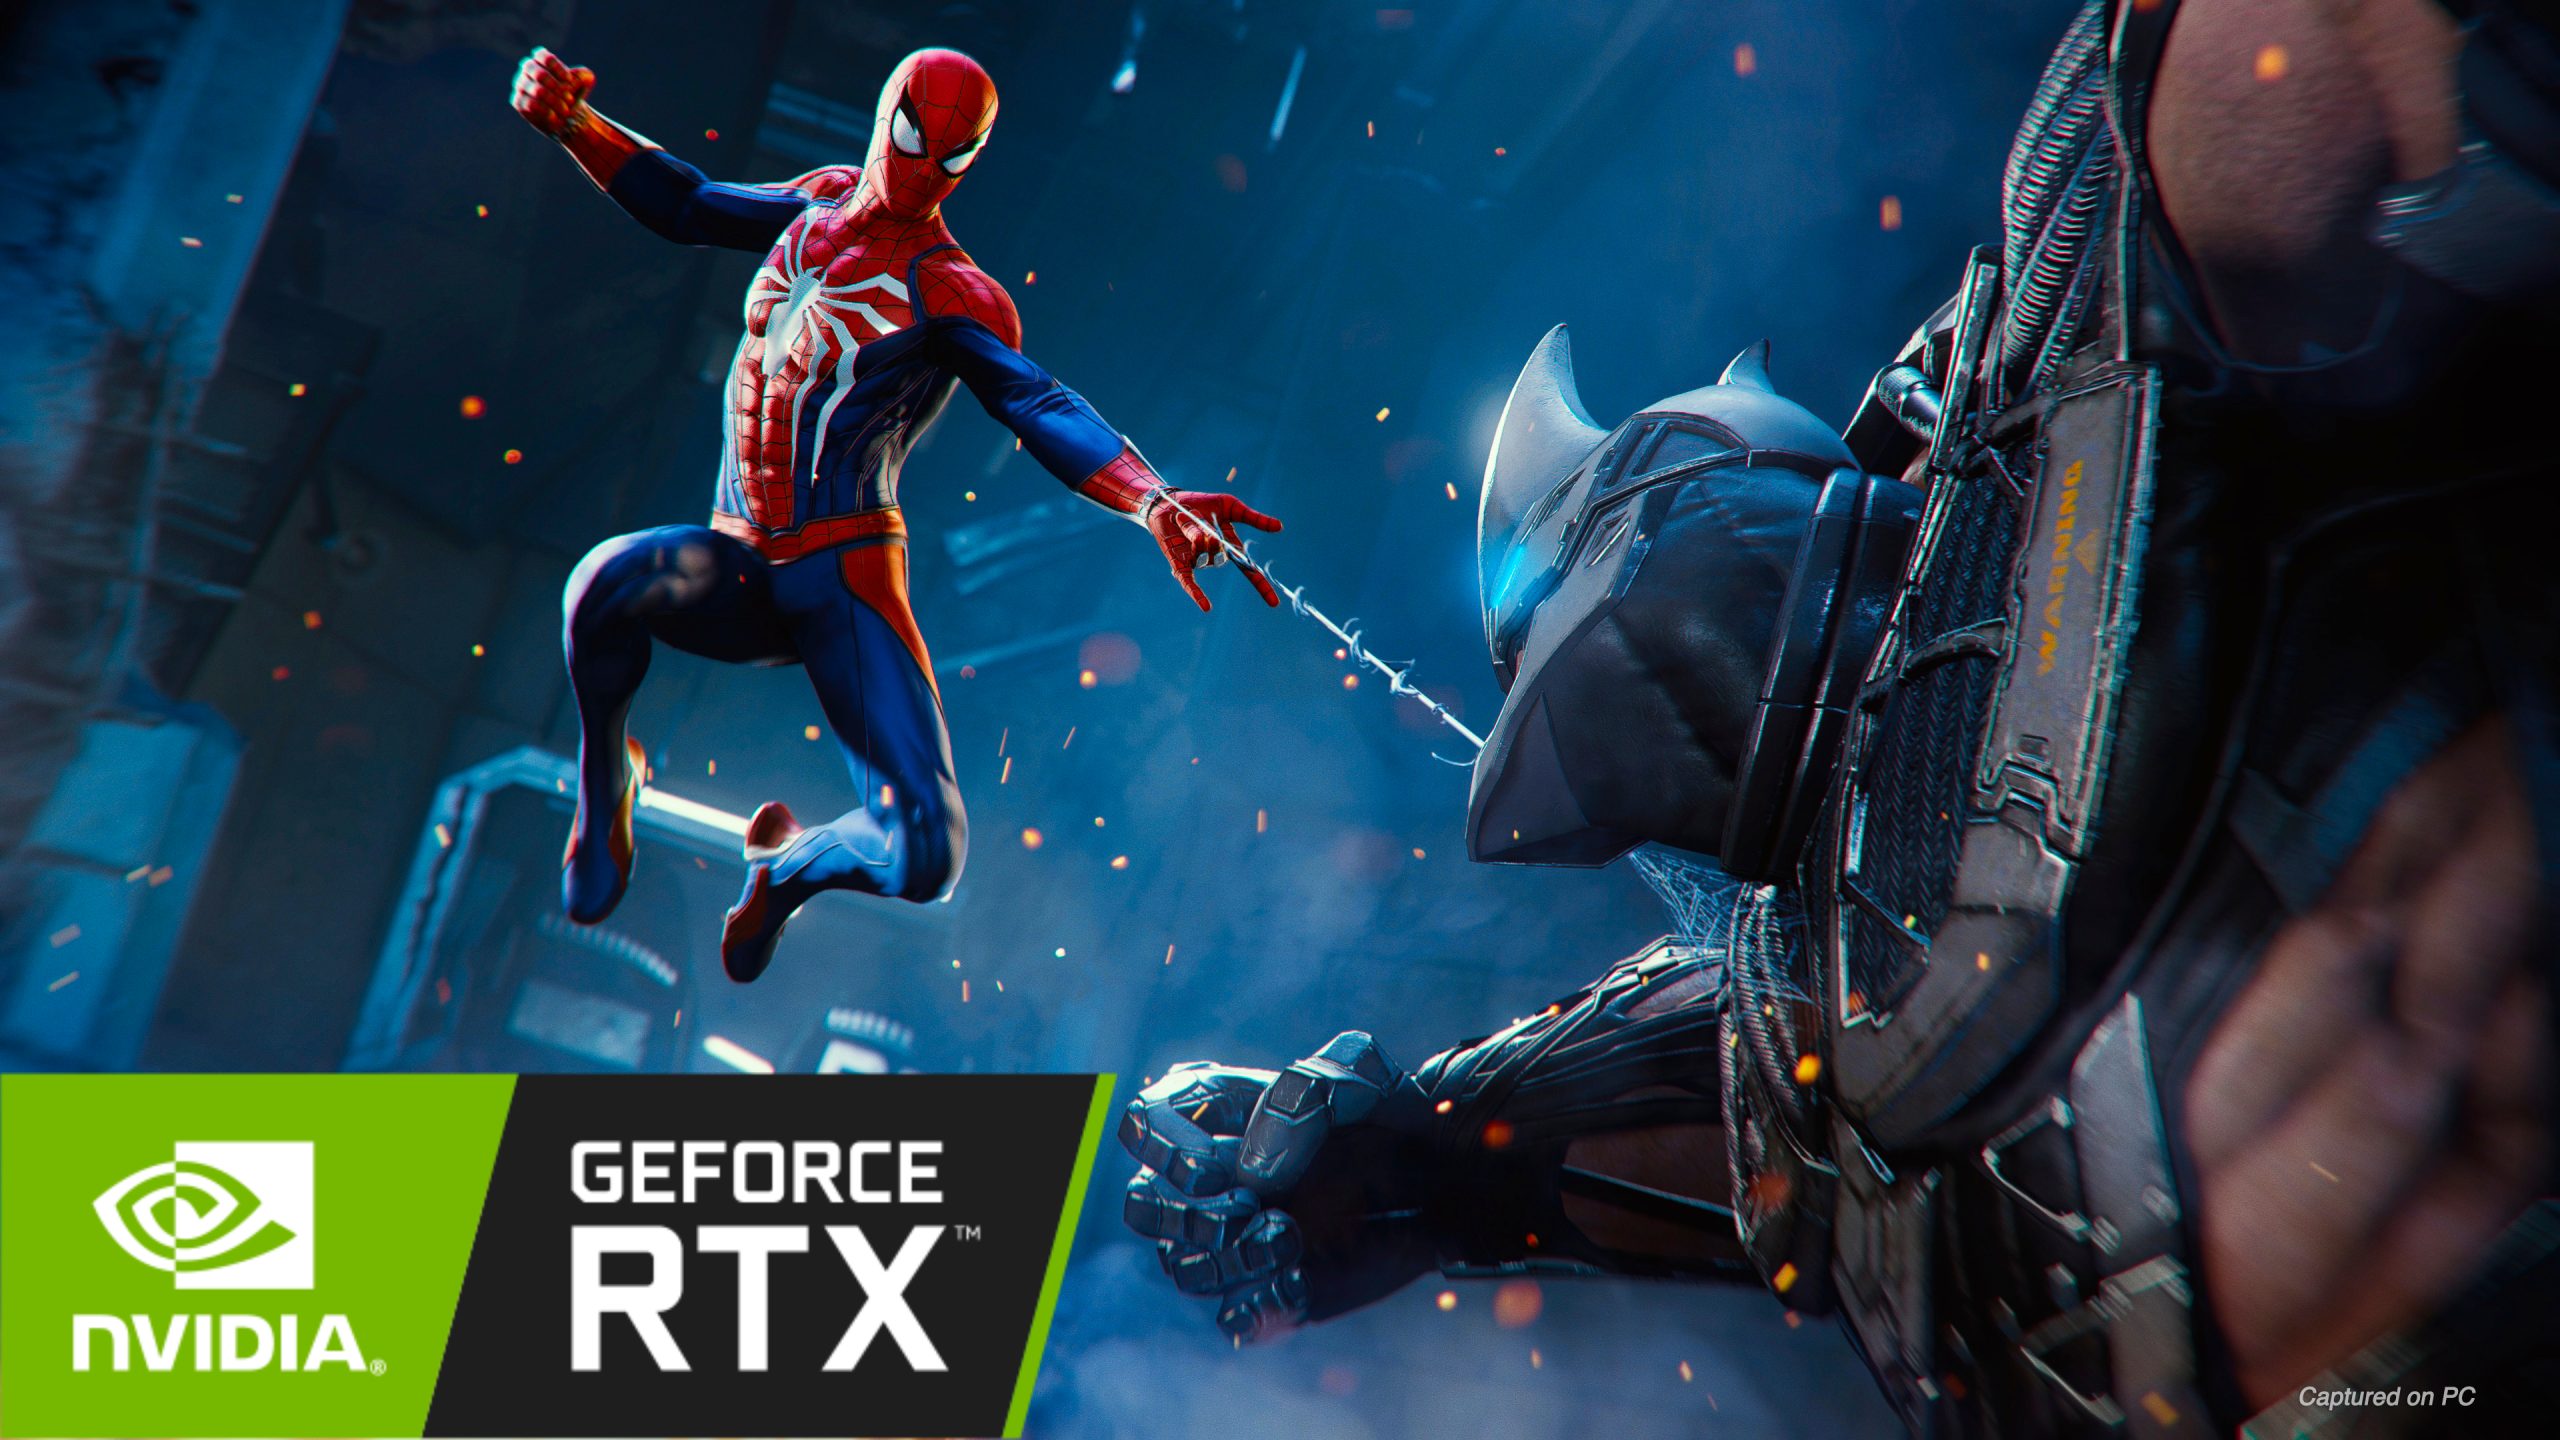 Nvidia is giving away Spider-Man Remastered with RTX GPUs | KitGuru